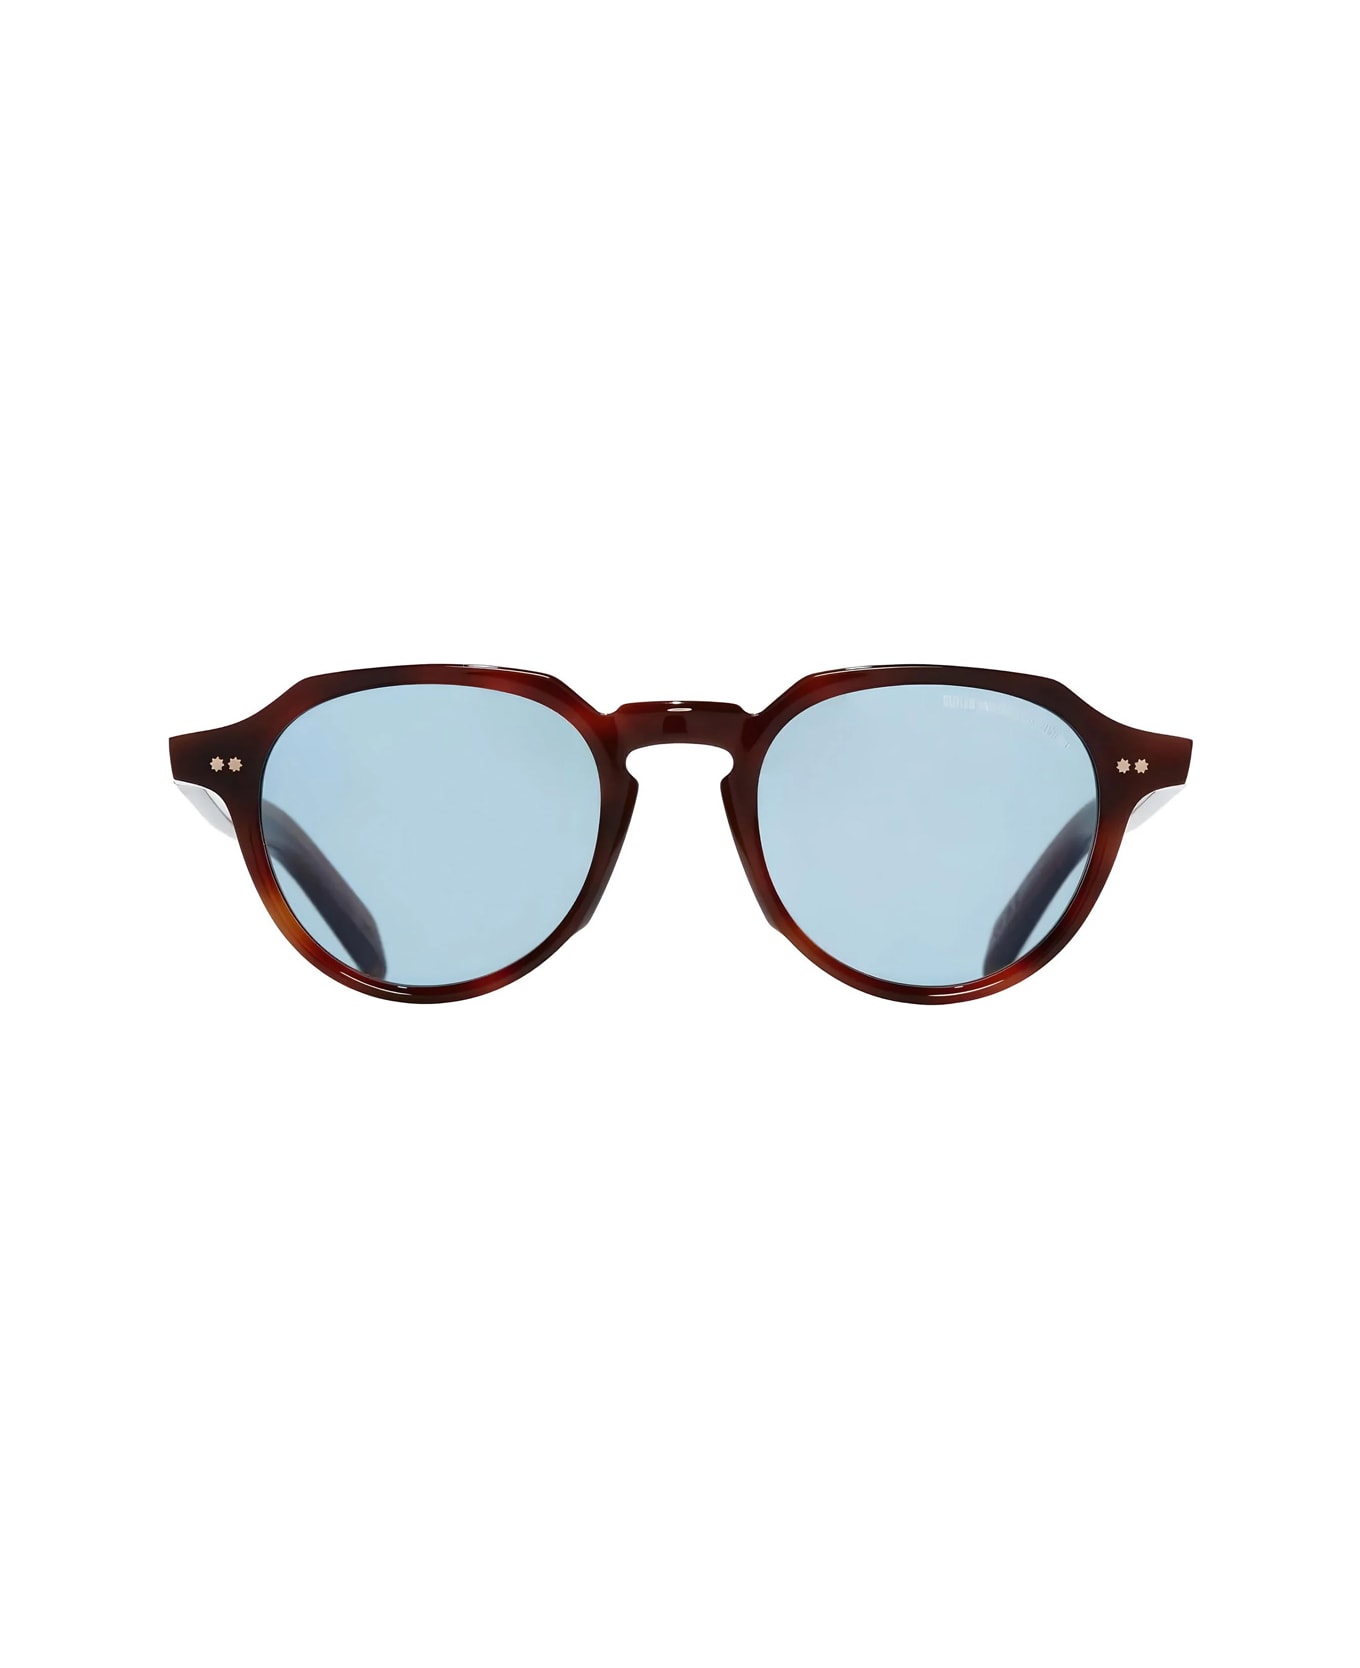 Cutler and Gross Gr06 02 Vintage Sunburst Sunglasses - Marrone サングラス